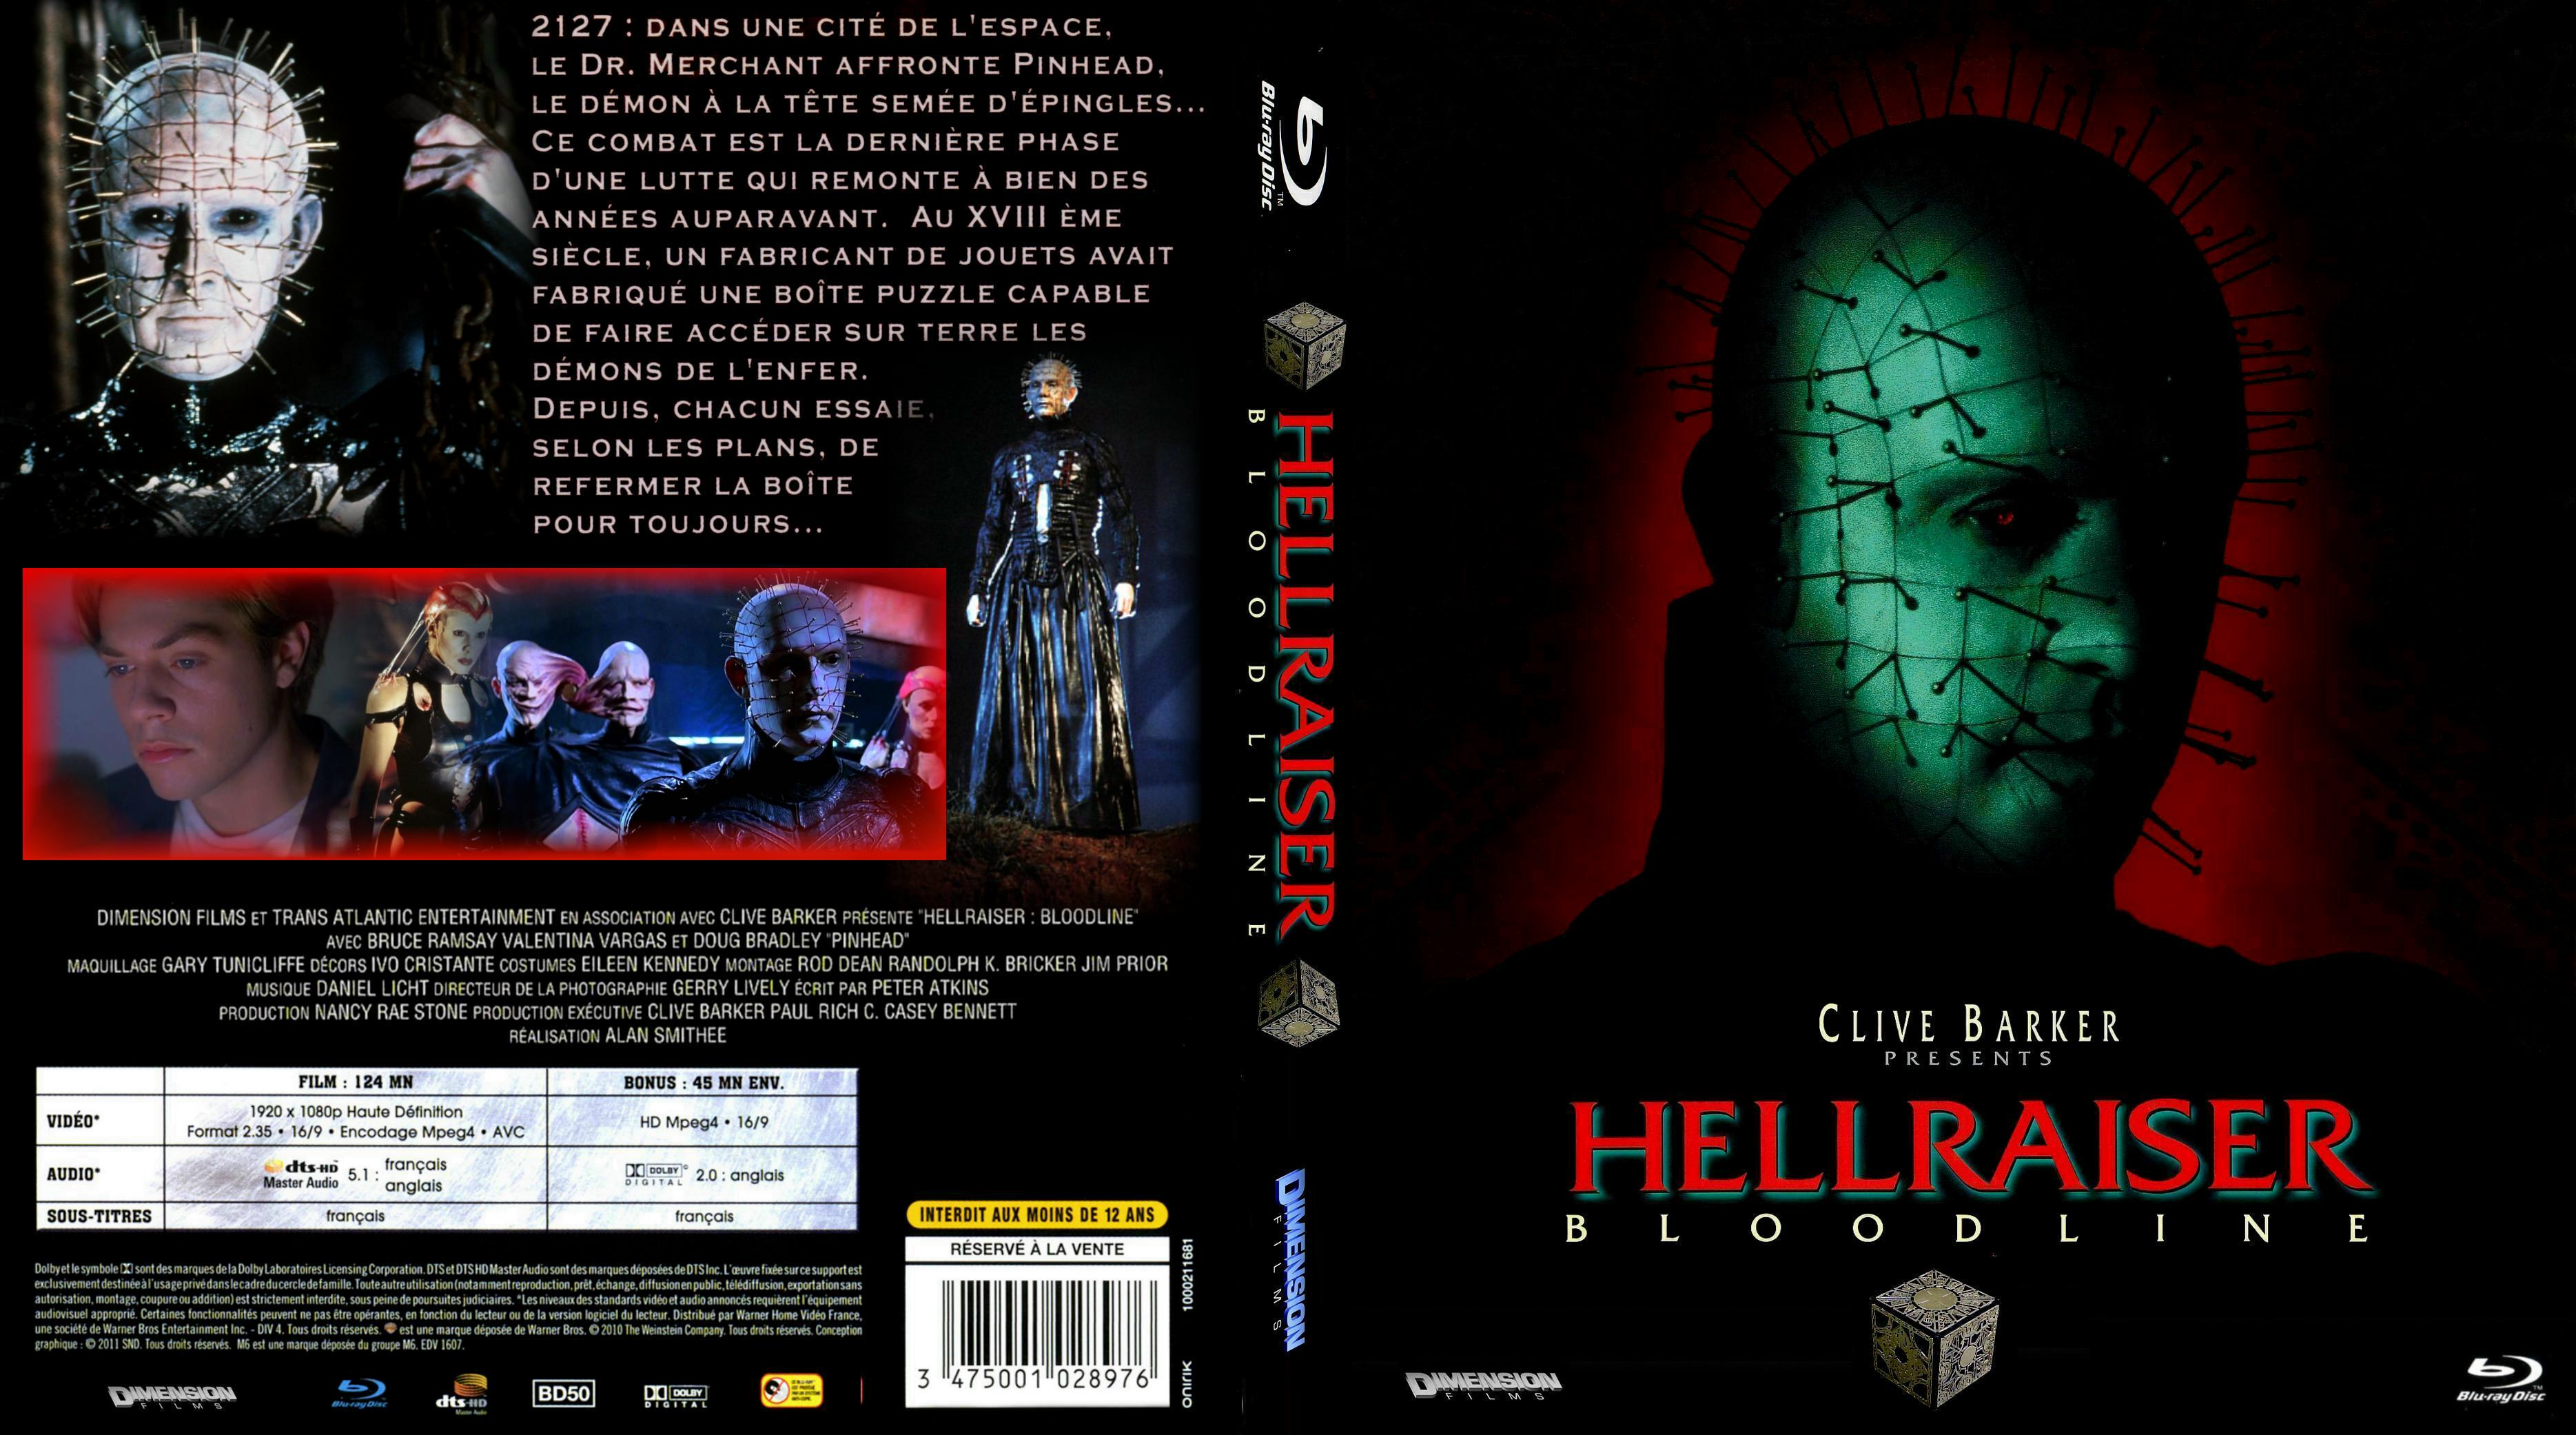 Jaquette DVD Hellraiser bloodline custom (BLU-RAY)